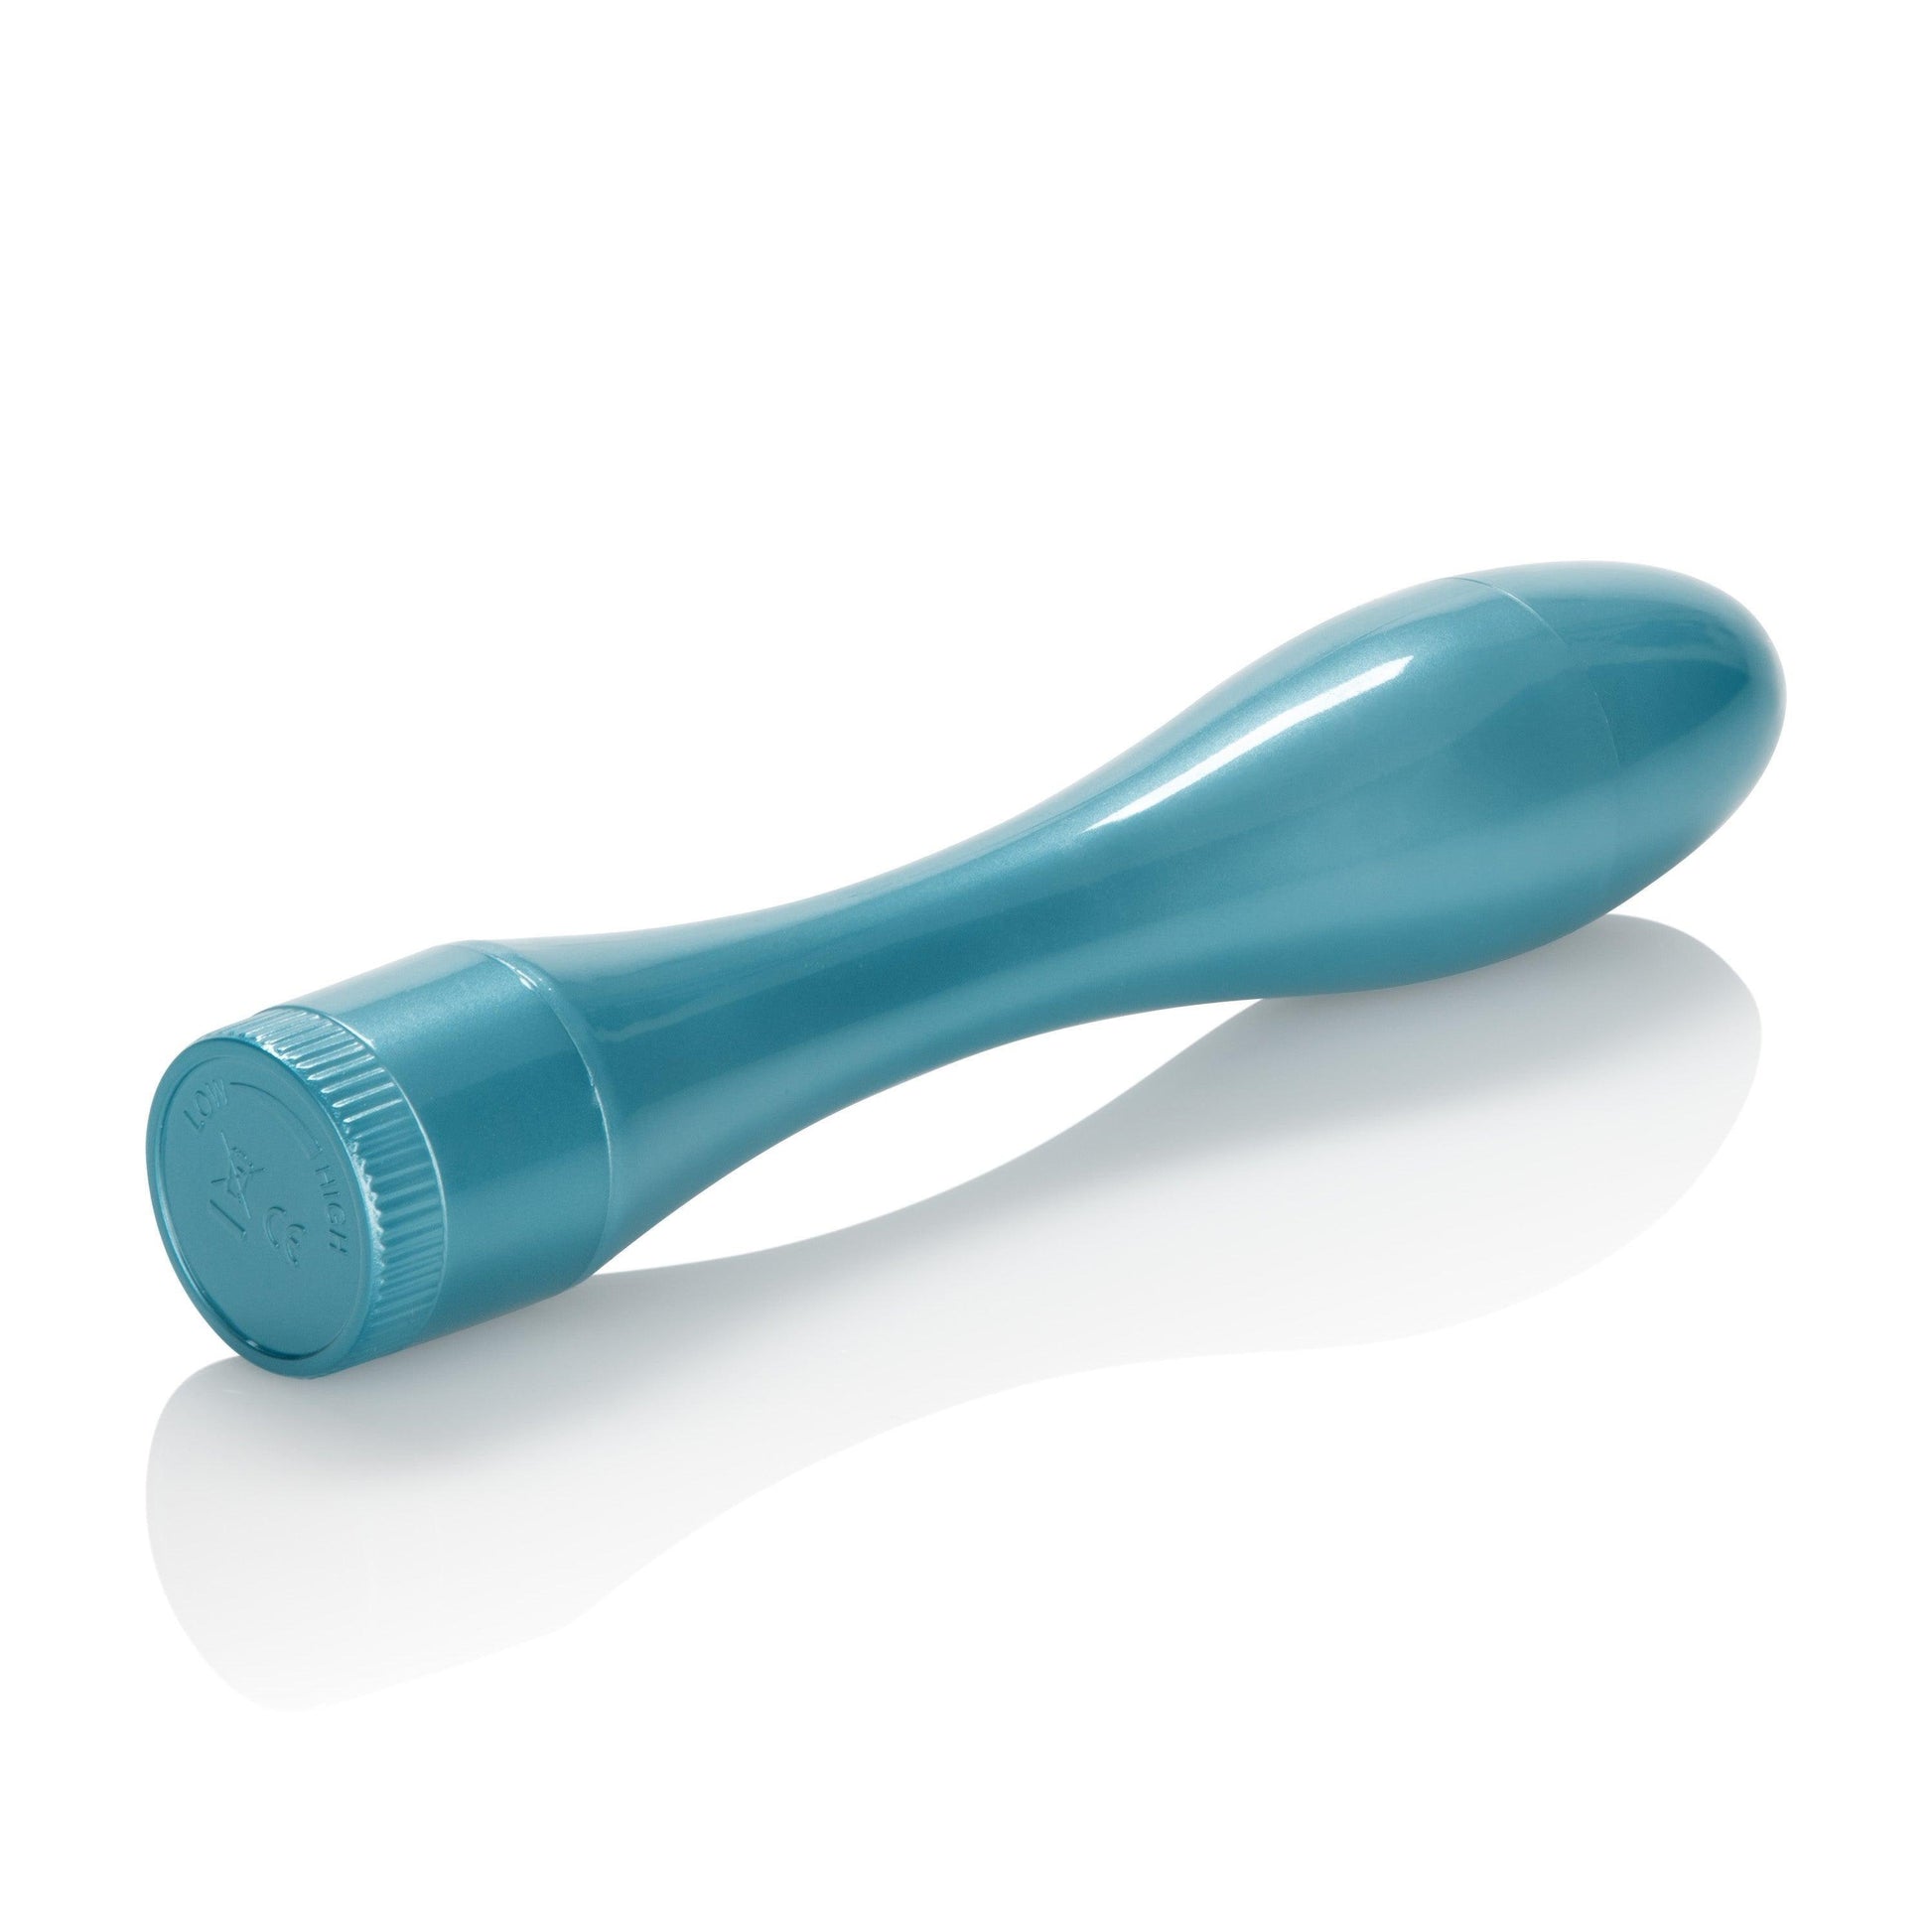 Teardrop Probe - Blue - My Sex Toy Hub